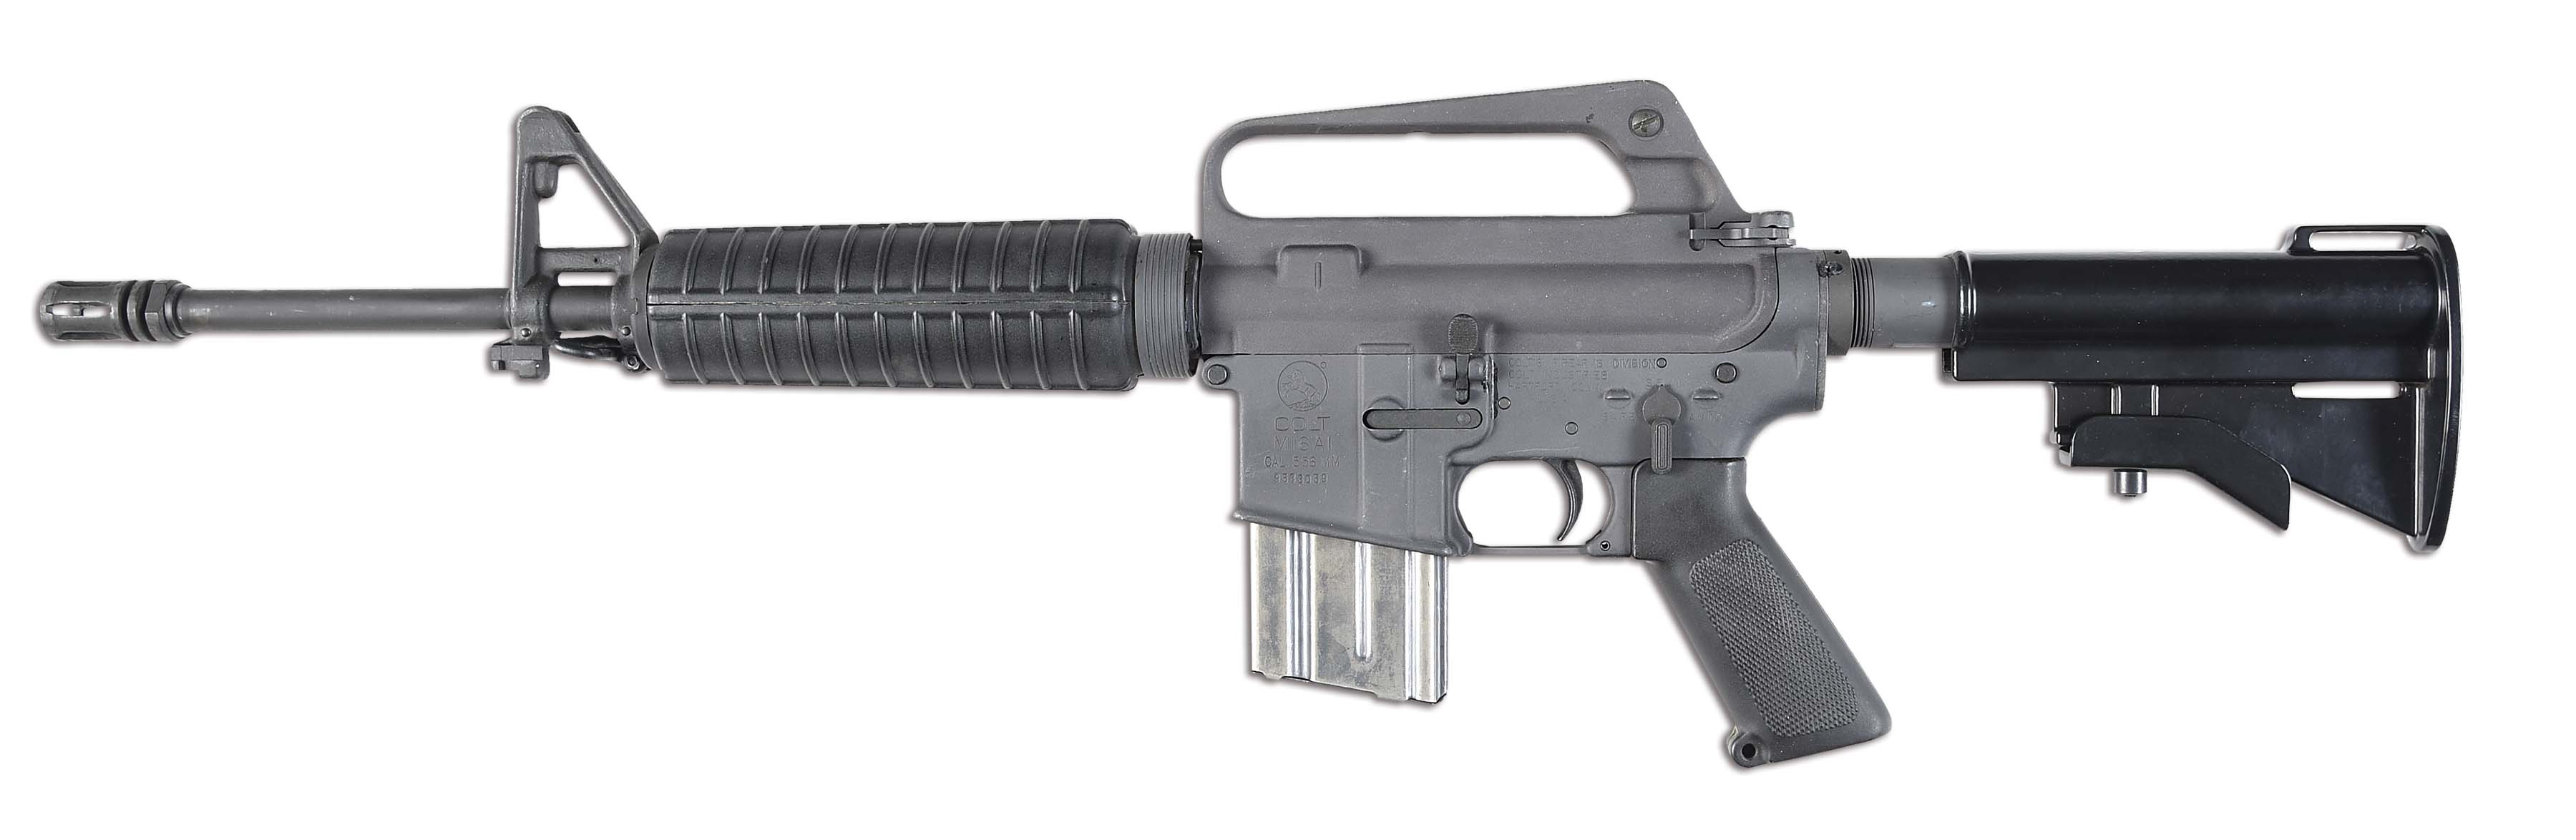 Colt M16A1 Machine Gun